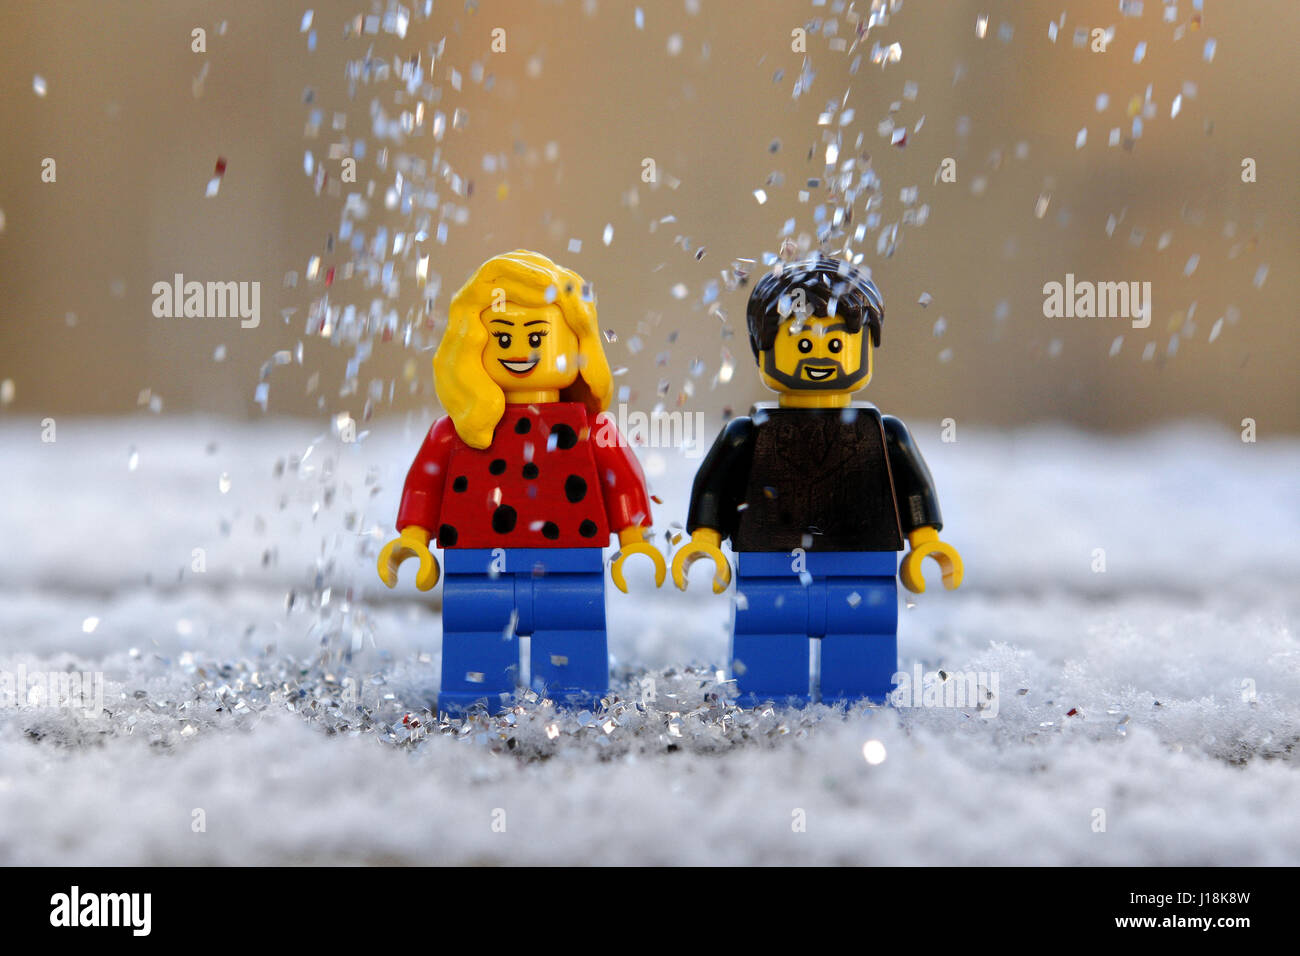 Maschio e femmina lego giovane facendo la doccia my glitter e neve Foto  stock - Alamy